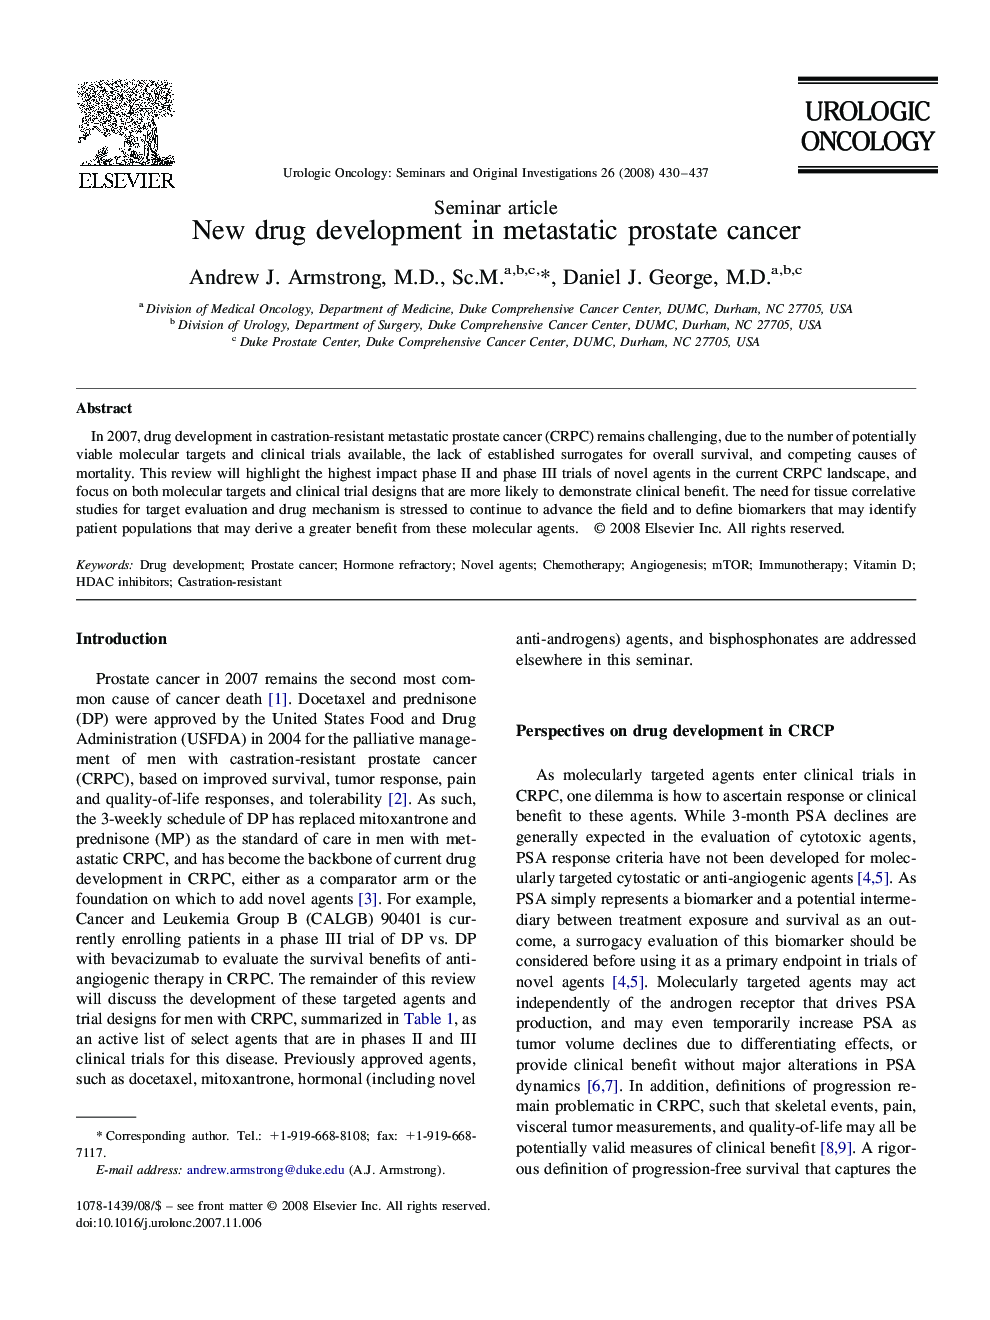 New drug development in metastatic prostate cancer